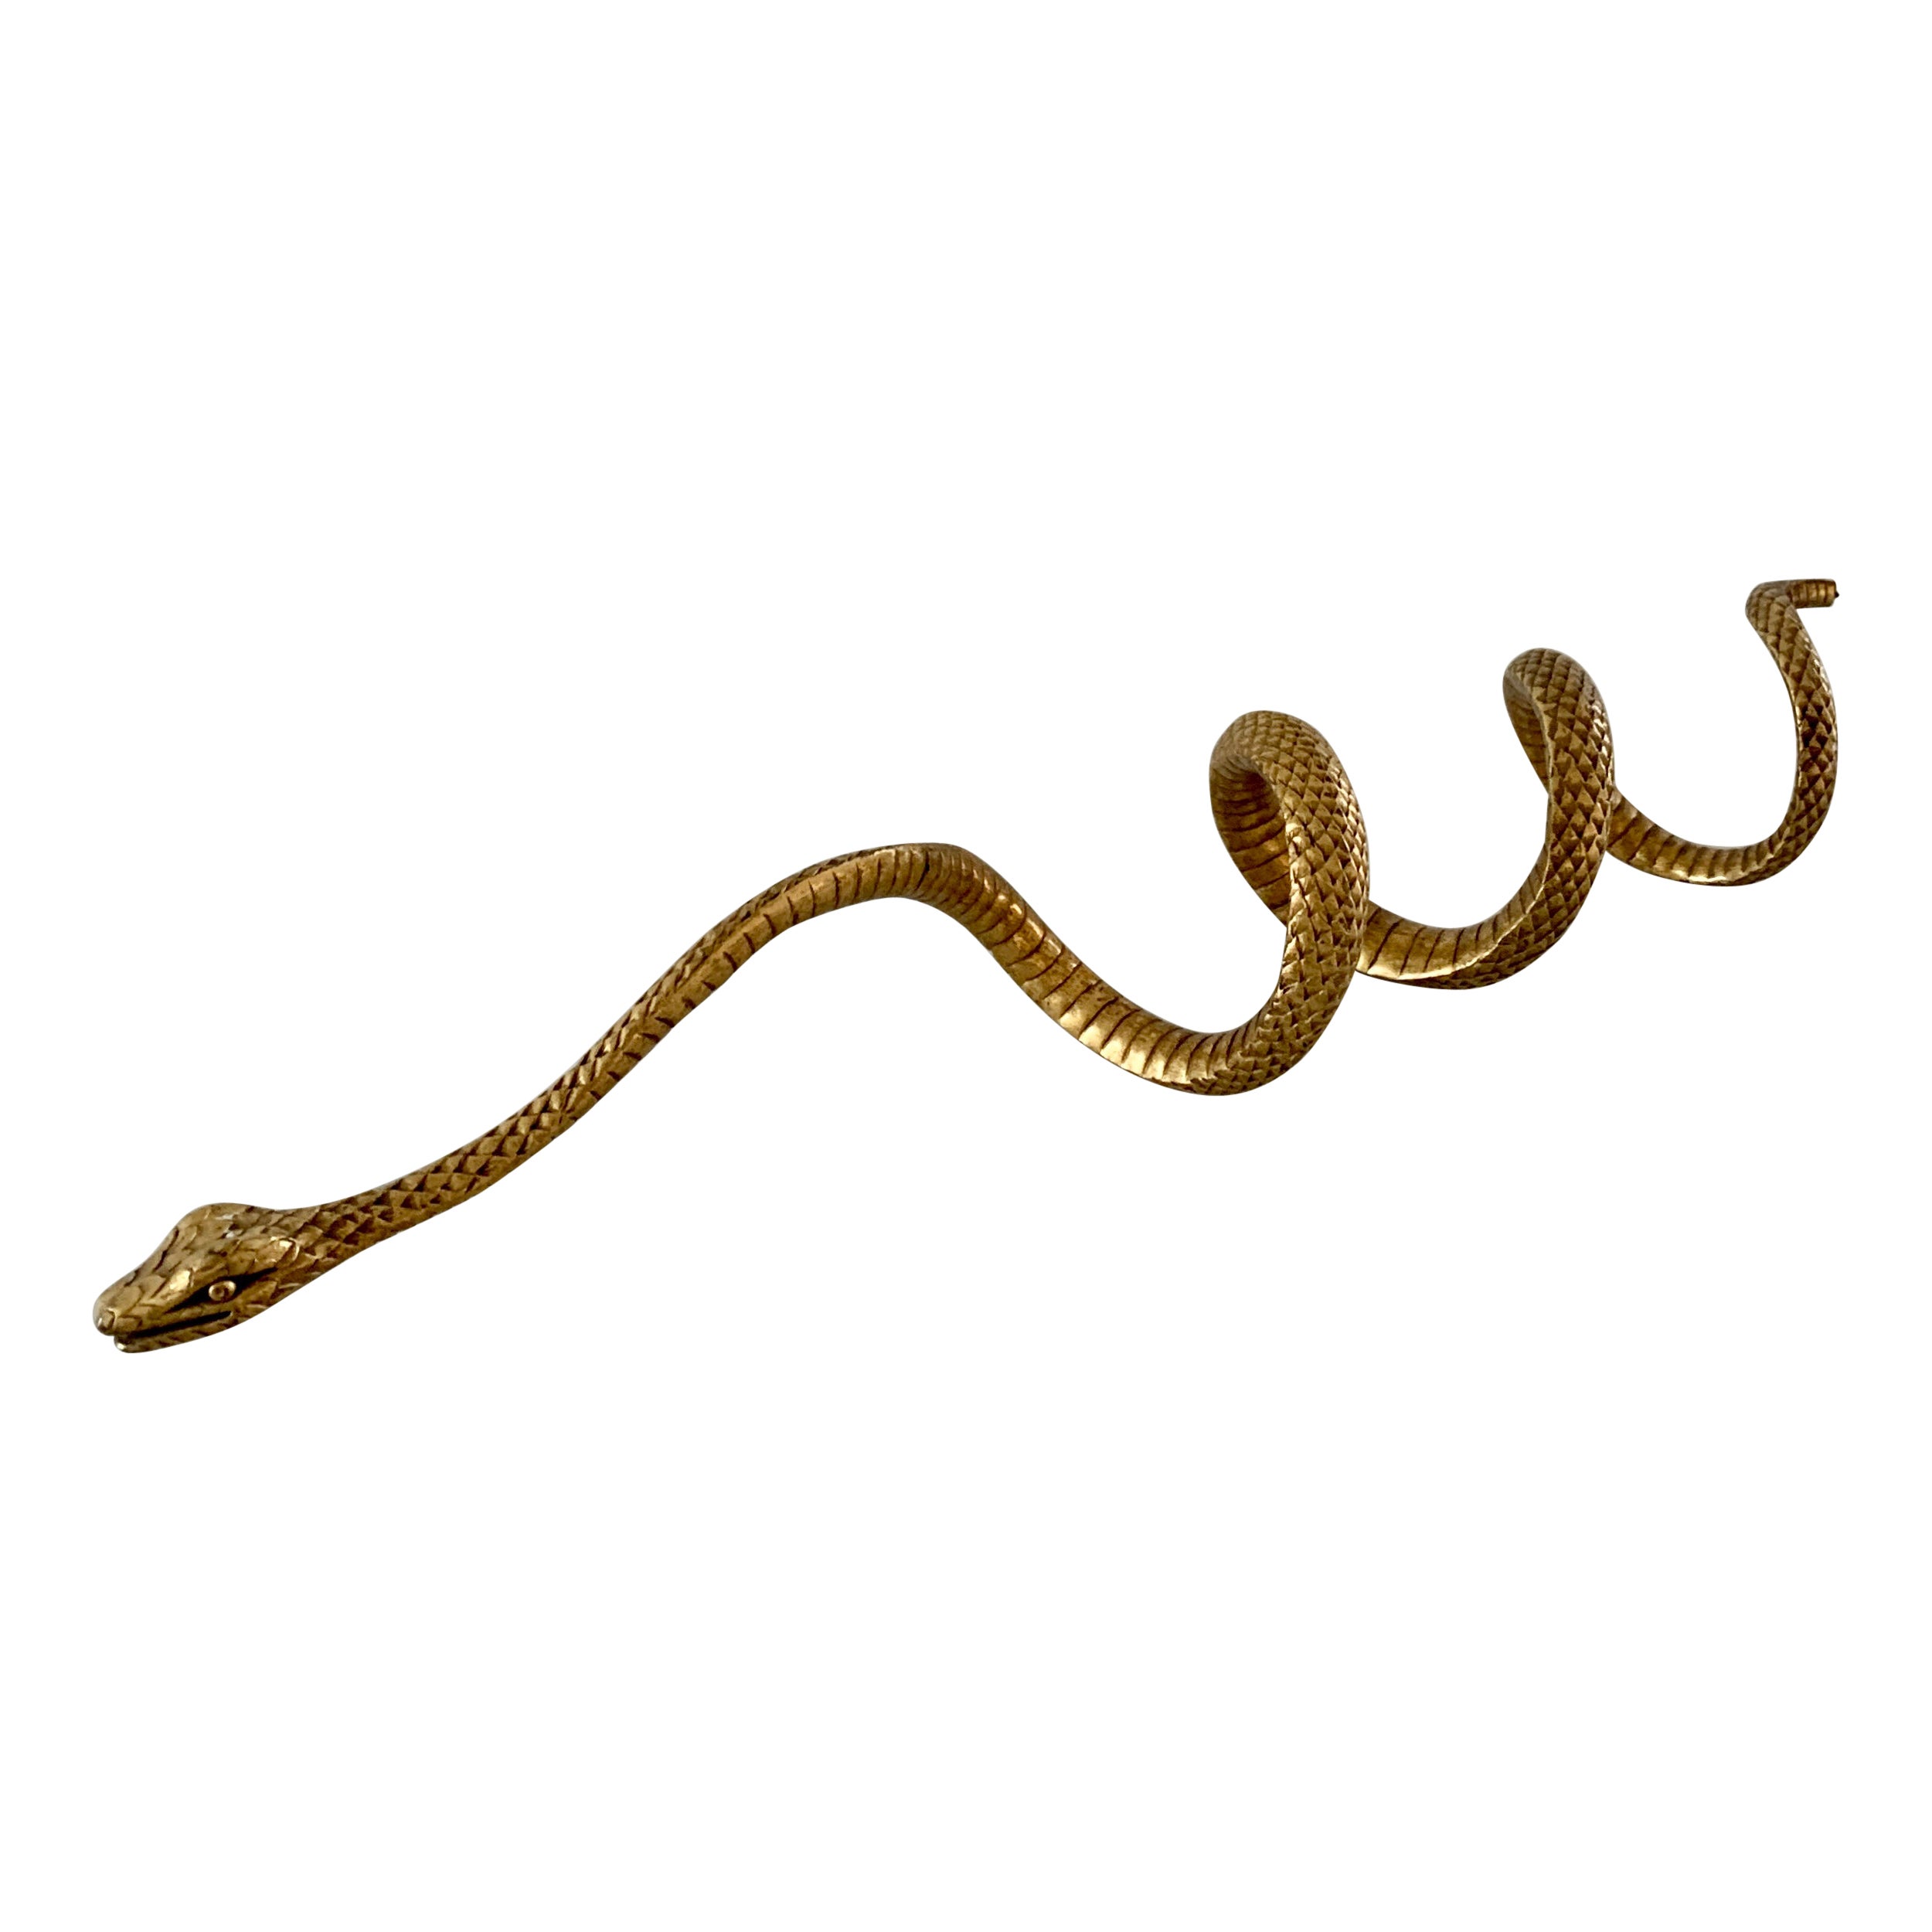 Vintage Cast Brass Coiled Serpent Snake For Sale